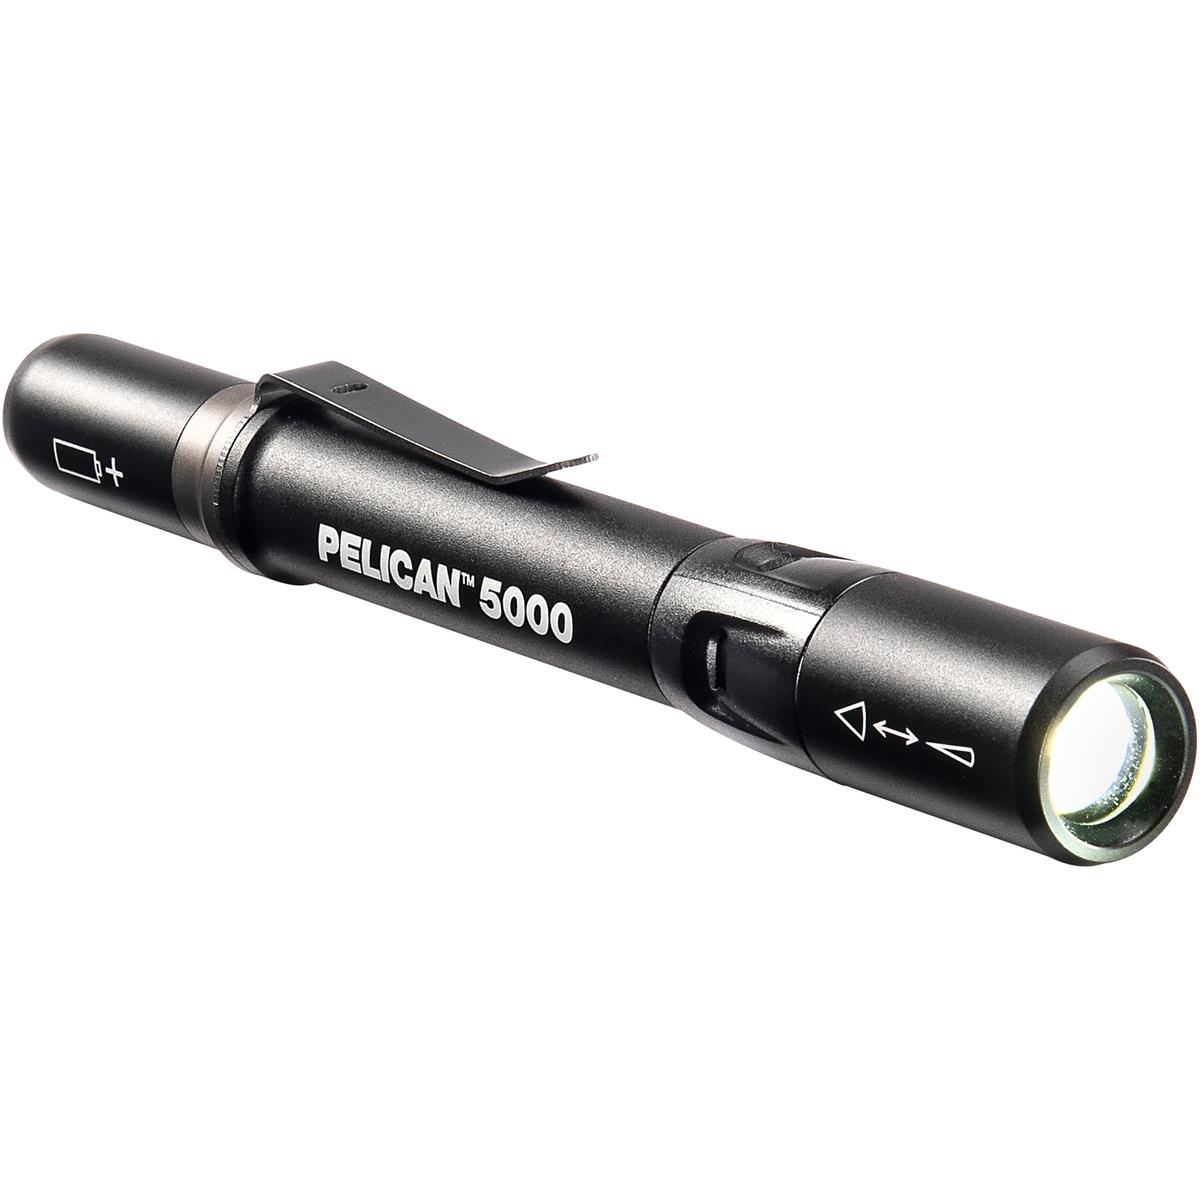 Image of Pelican 5000 LED Flashlight